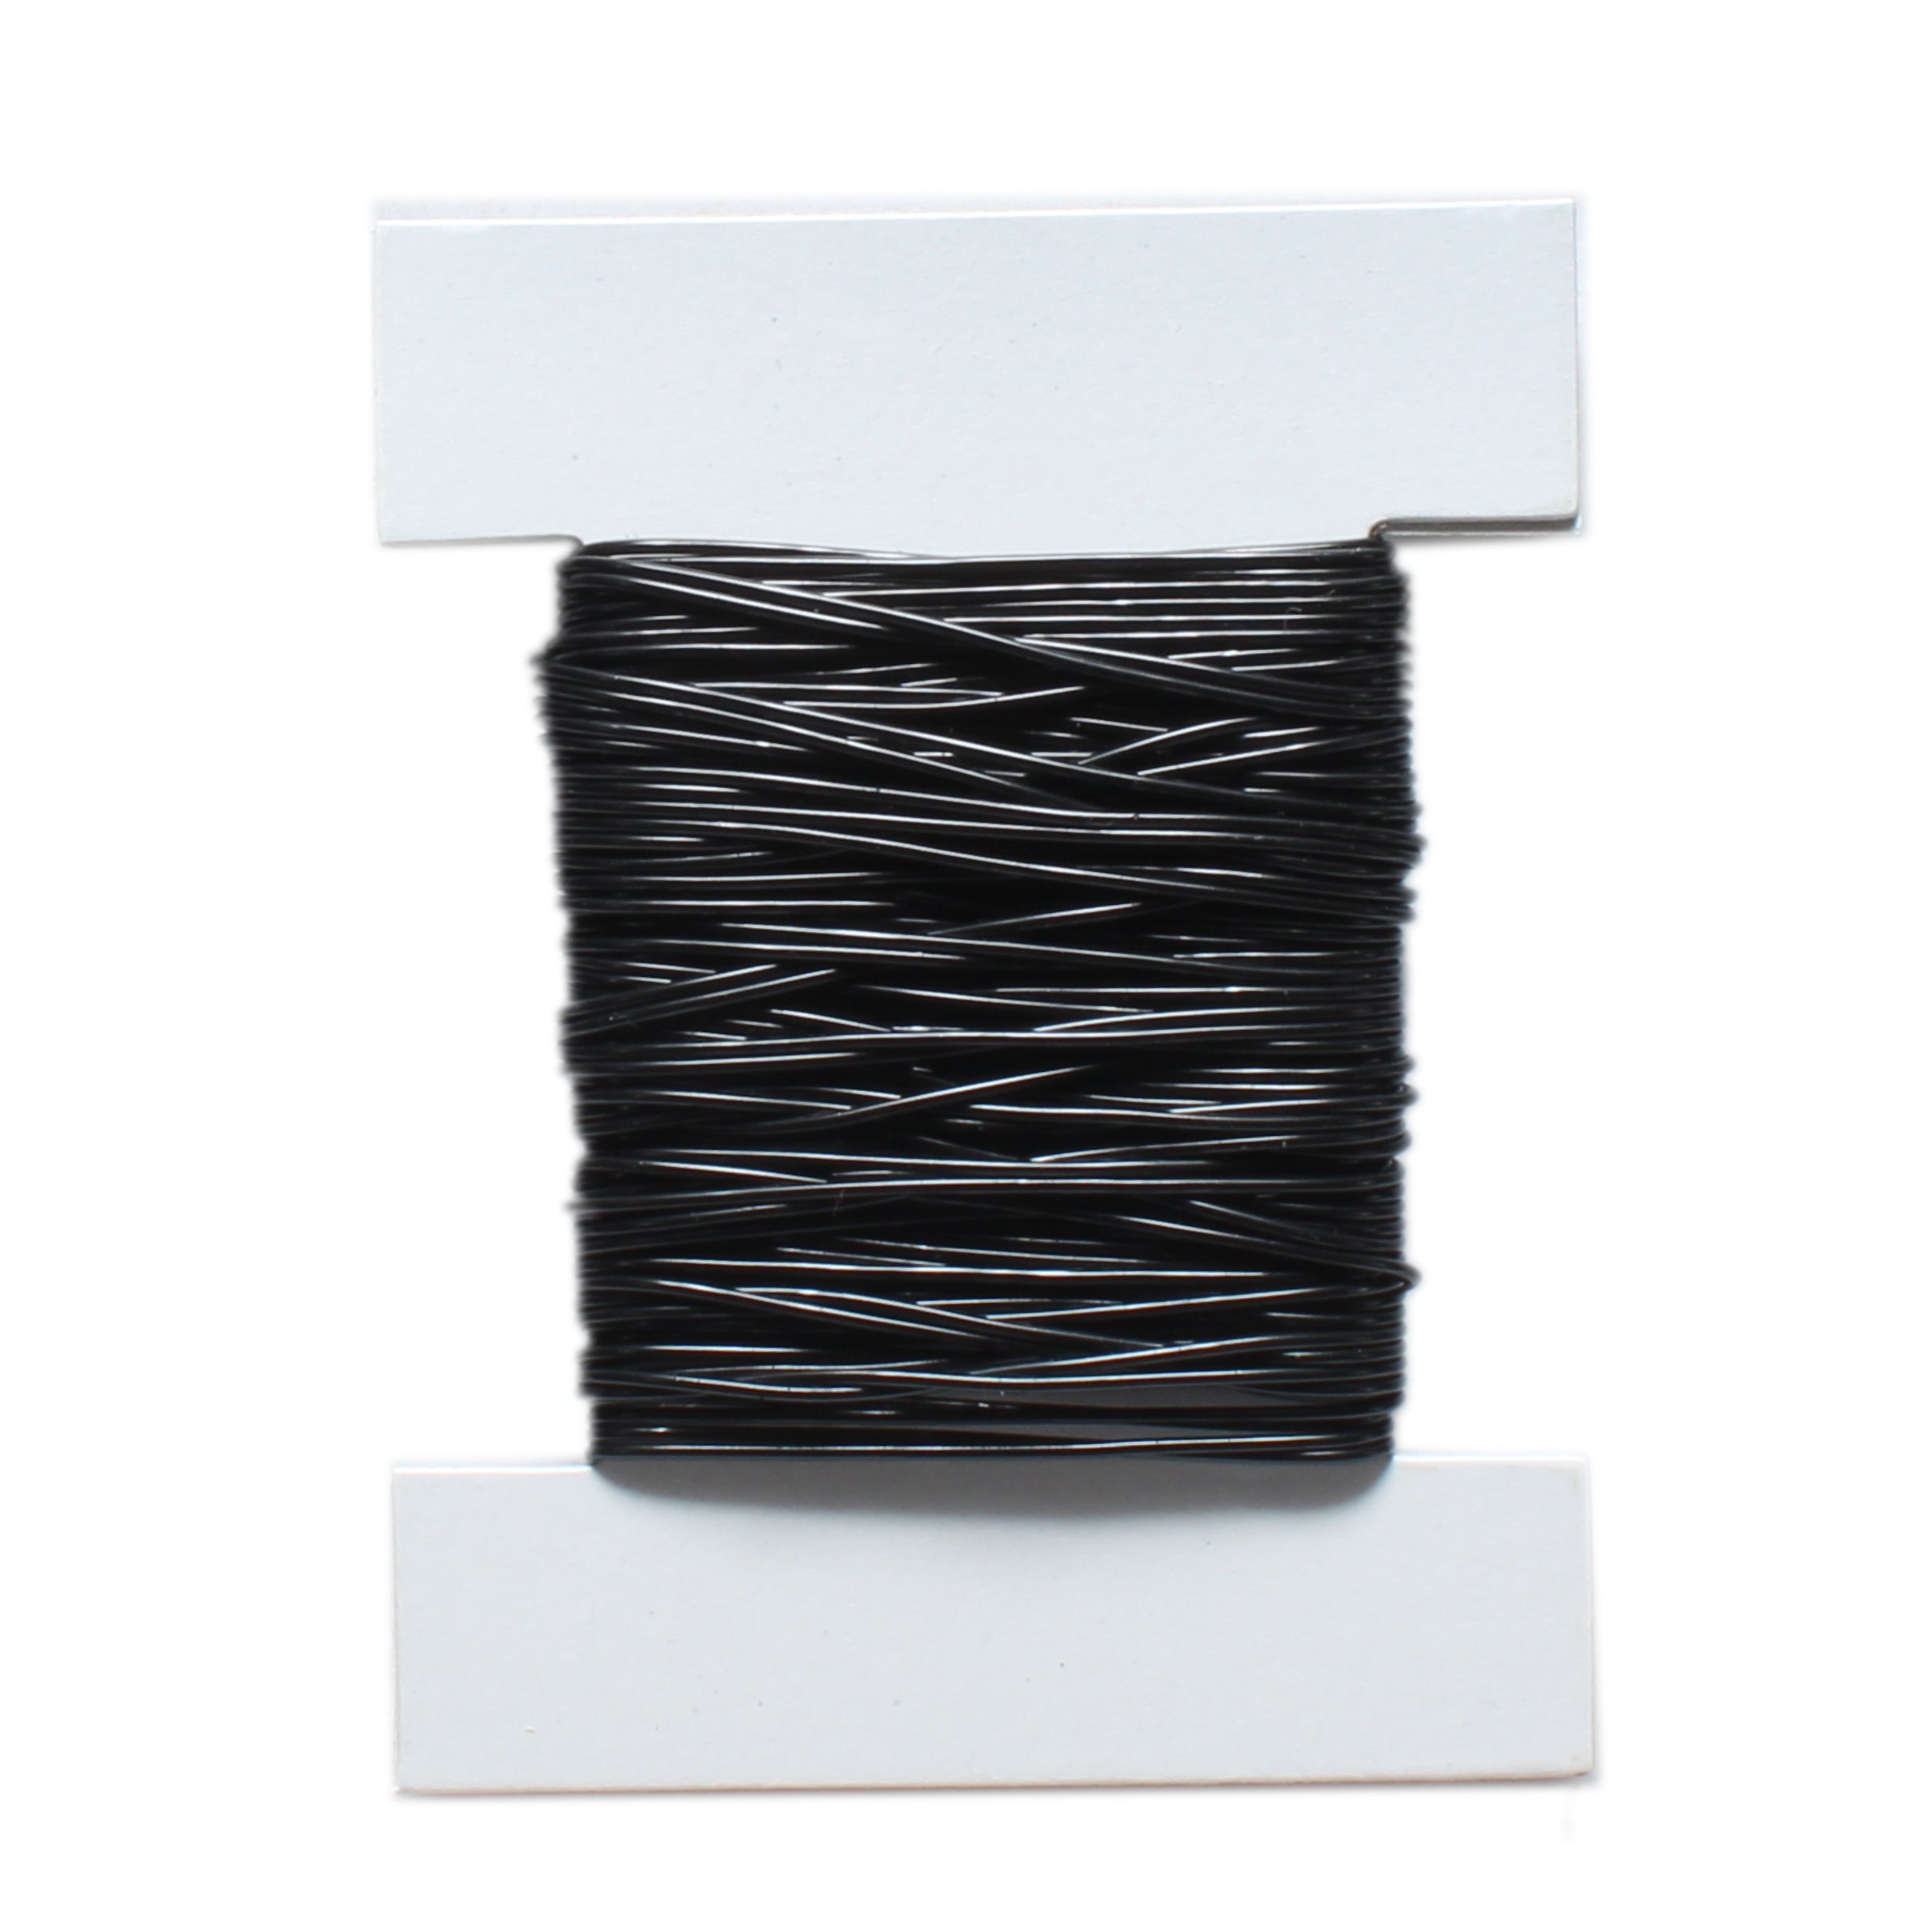 Elastic Black Wire 0.8Mm 10M